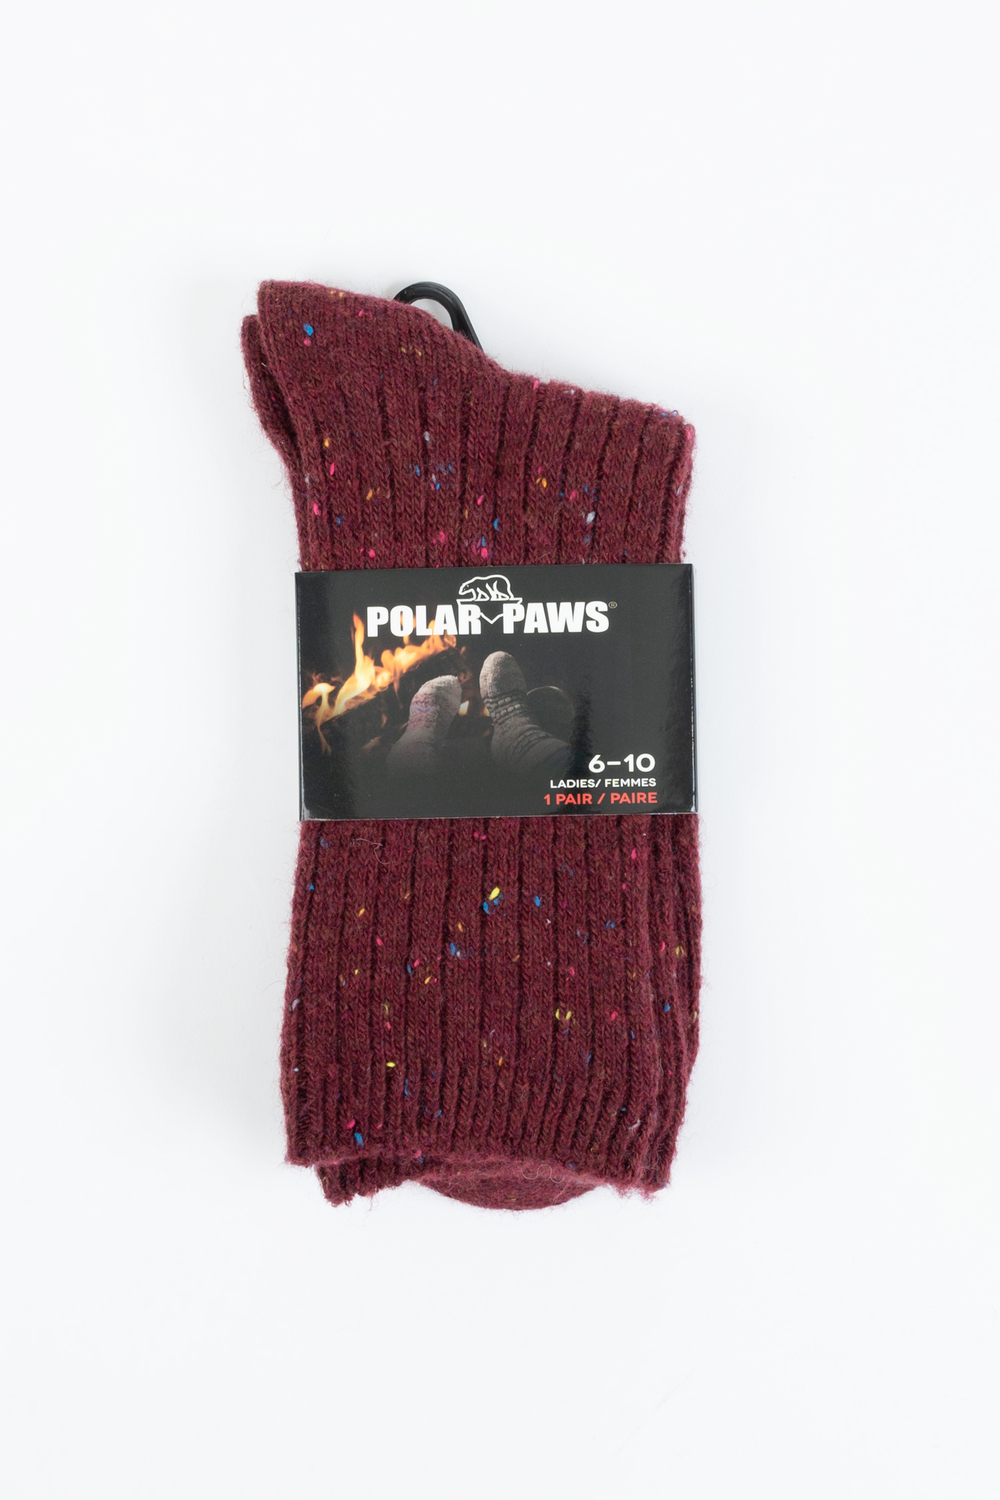 Polar Paws - Wool crew socks - Burgundy